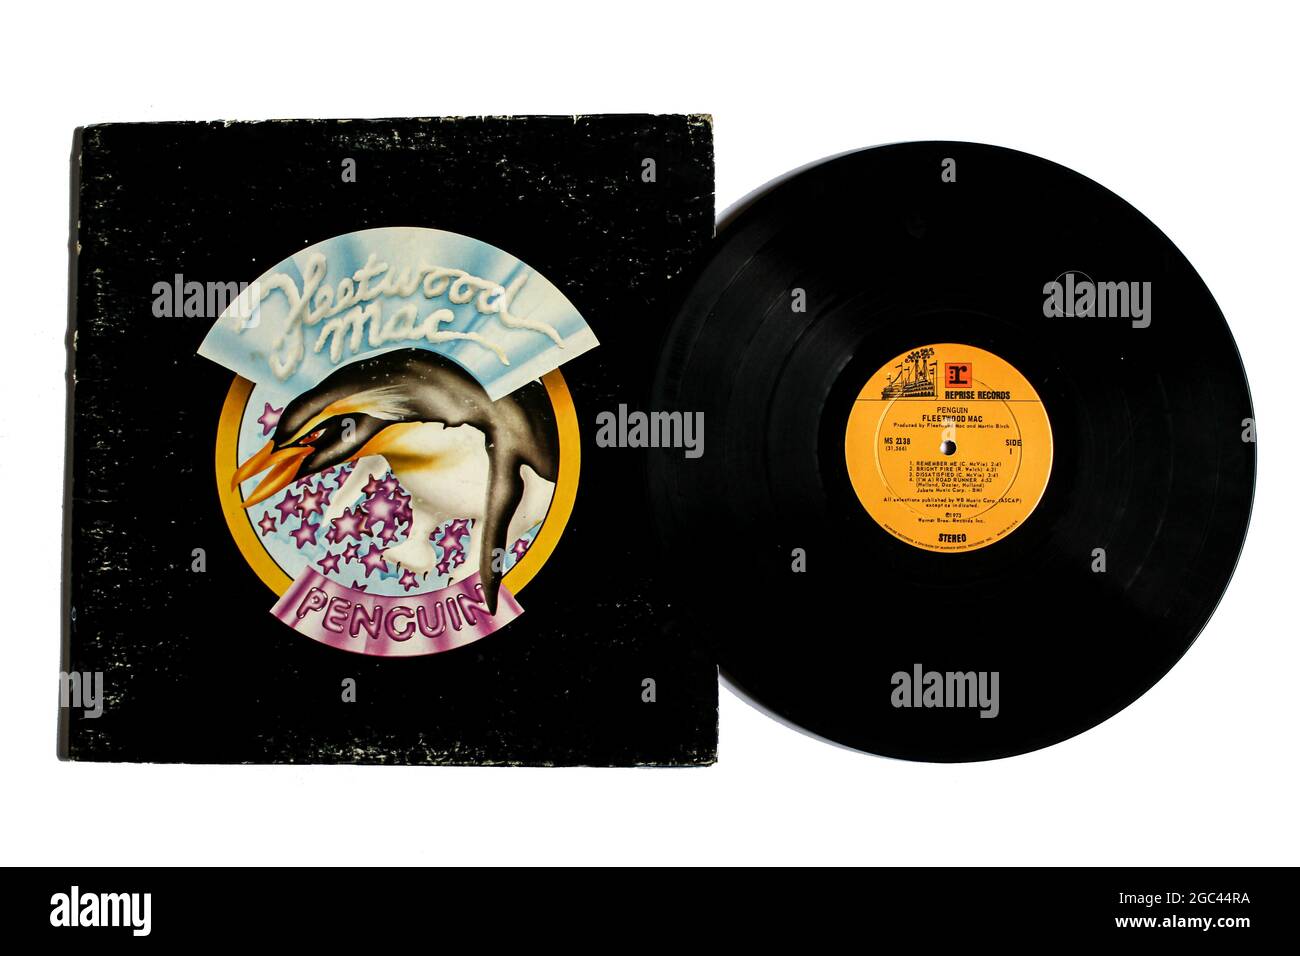 Rock- und Soft-Rock-Band, Fleetwood Mac-Musikalbum auf Vinyl-Schallplatte. Titel: Penguin Album Cover Stockfoto